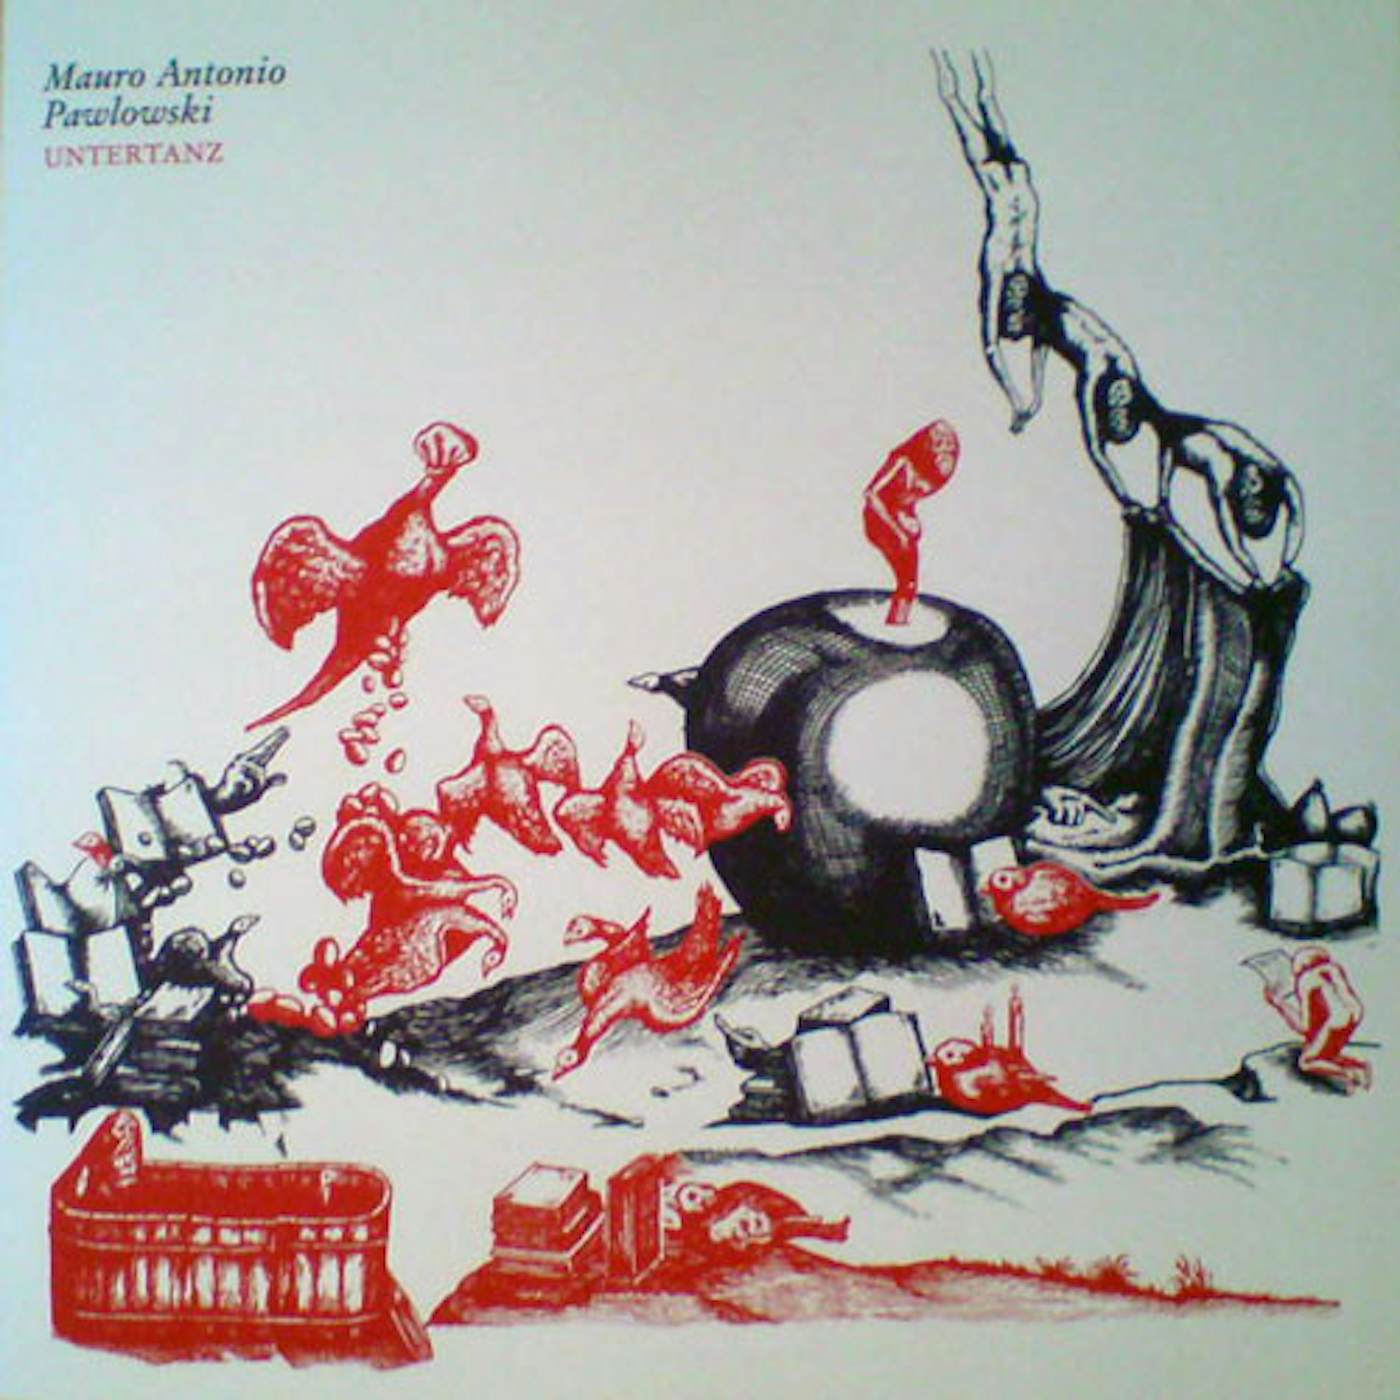 Mauro Antonio Pawlowski UNTERTANZ Vinyl Record